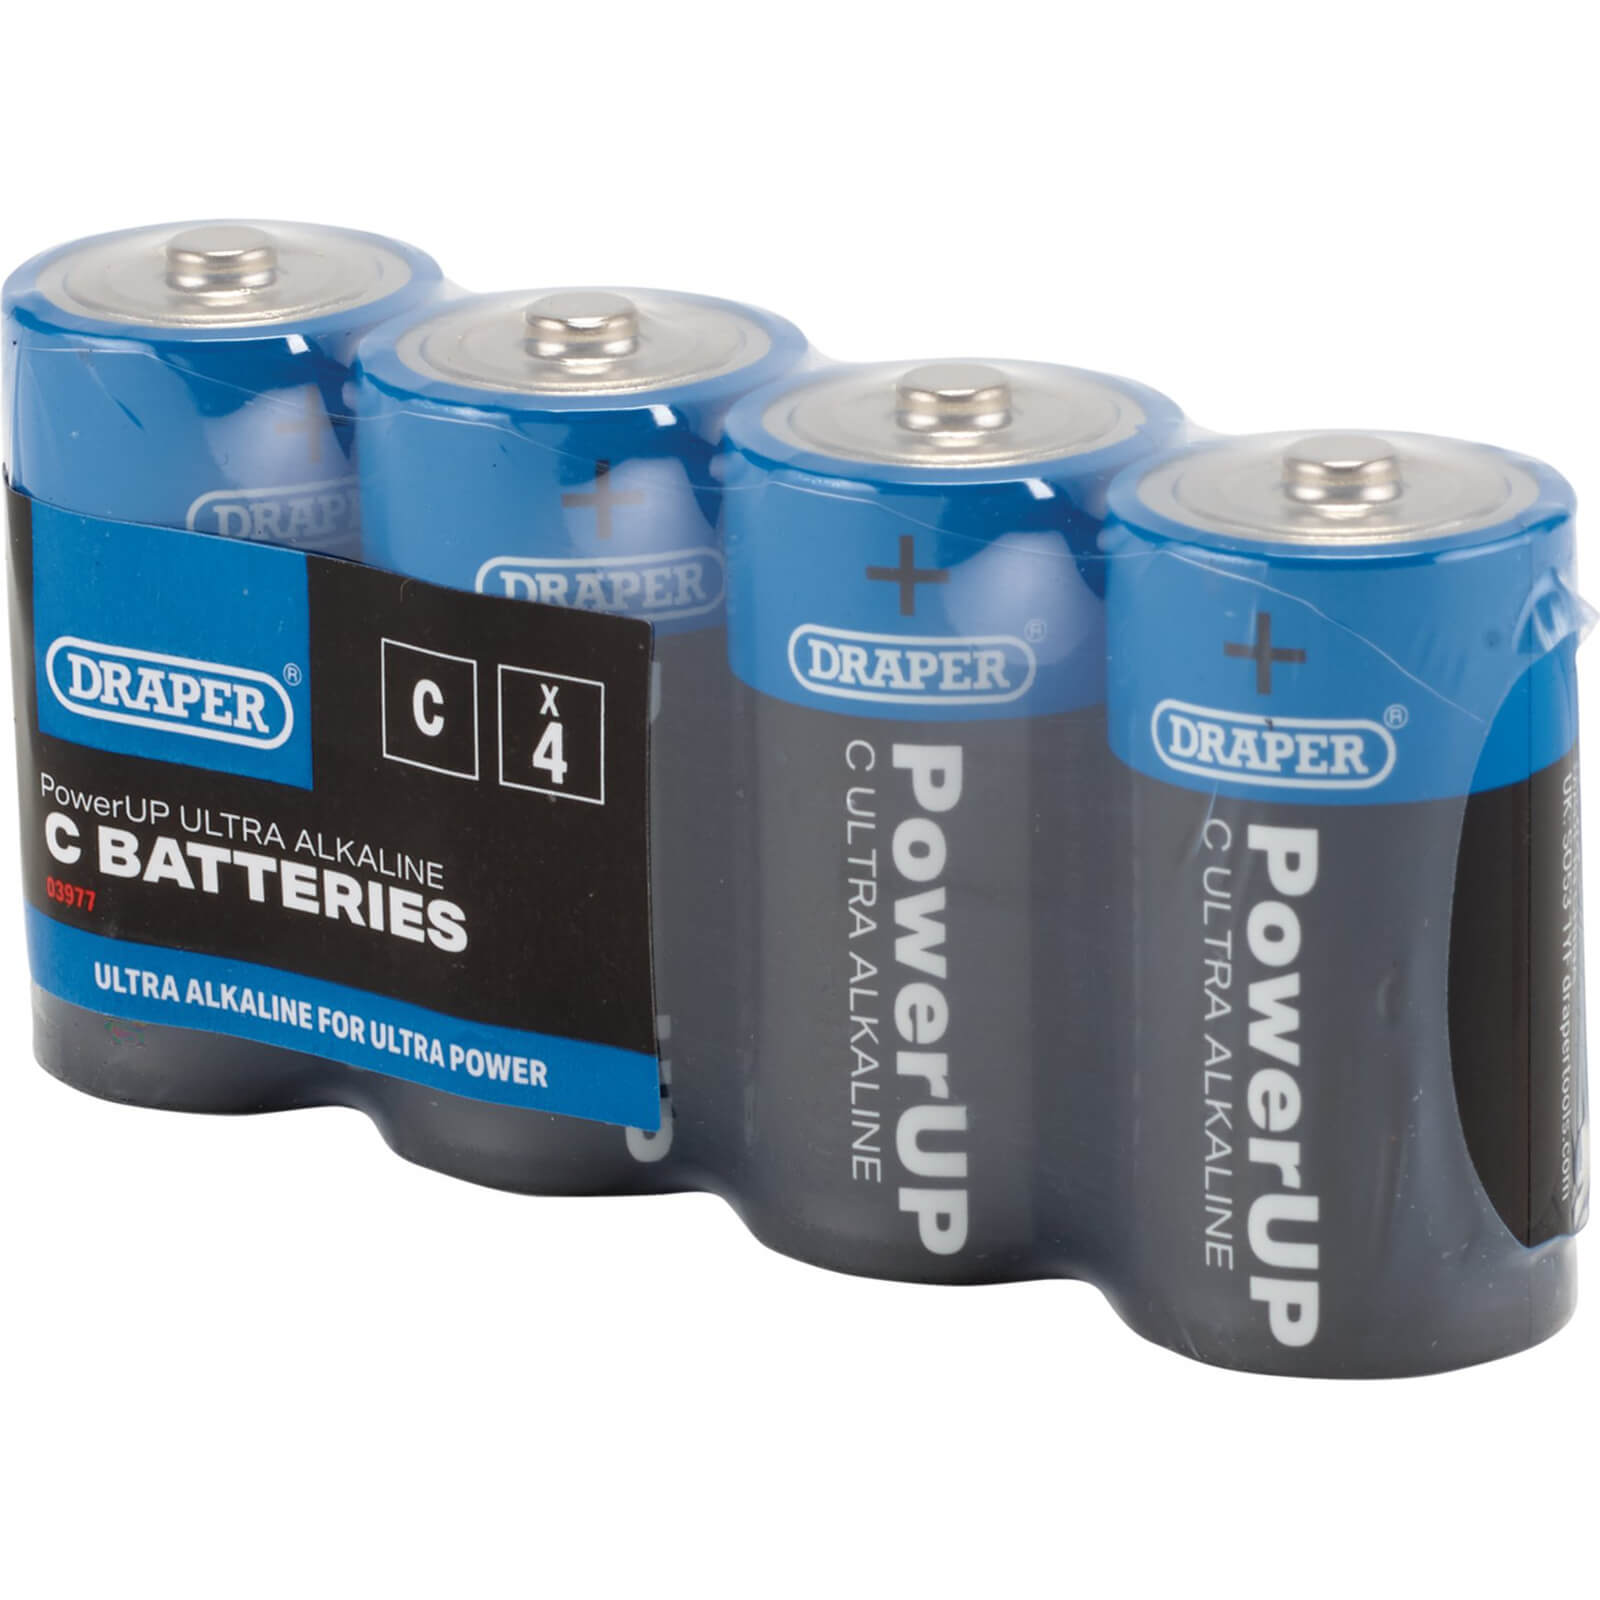 Draper Powerup Ultra Alkaline C Cell Batteries Pack of 4